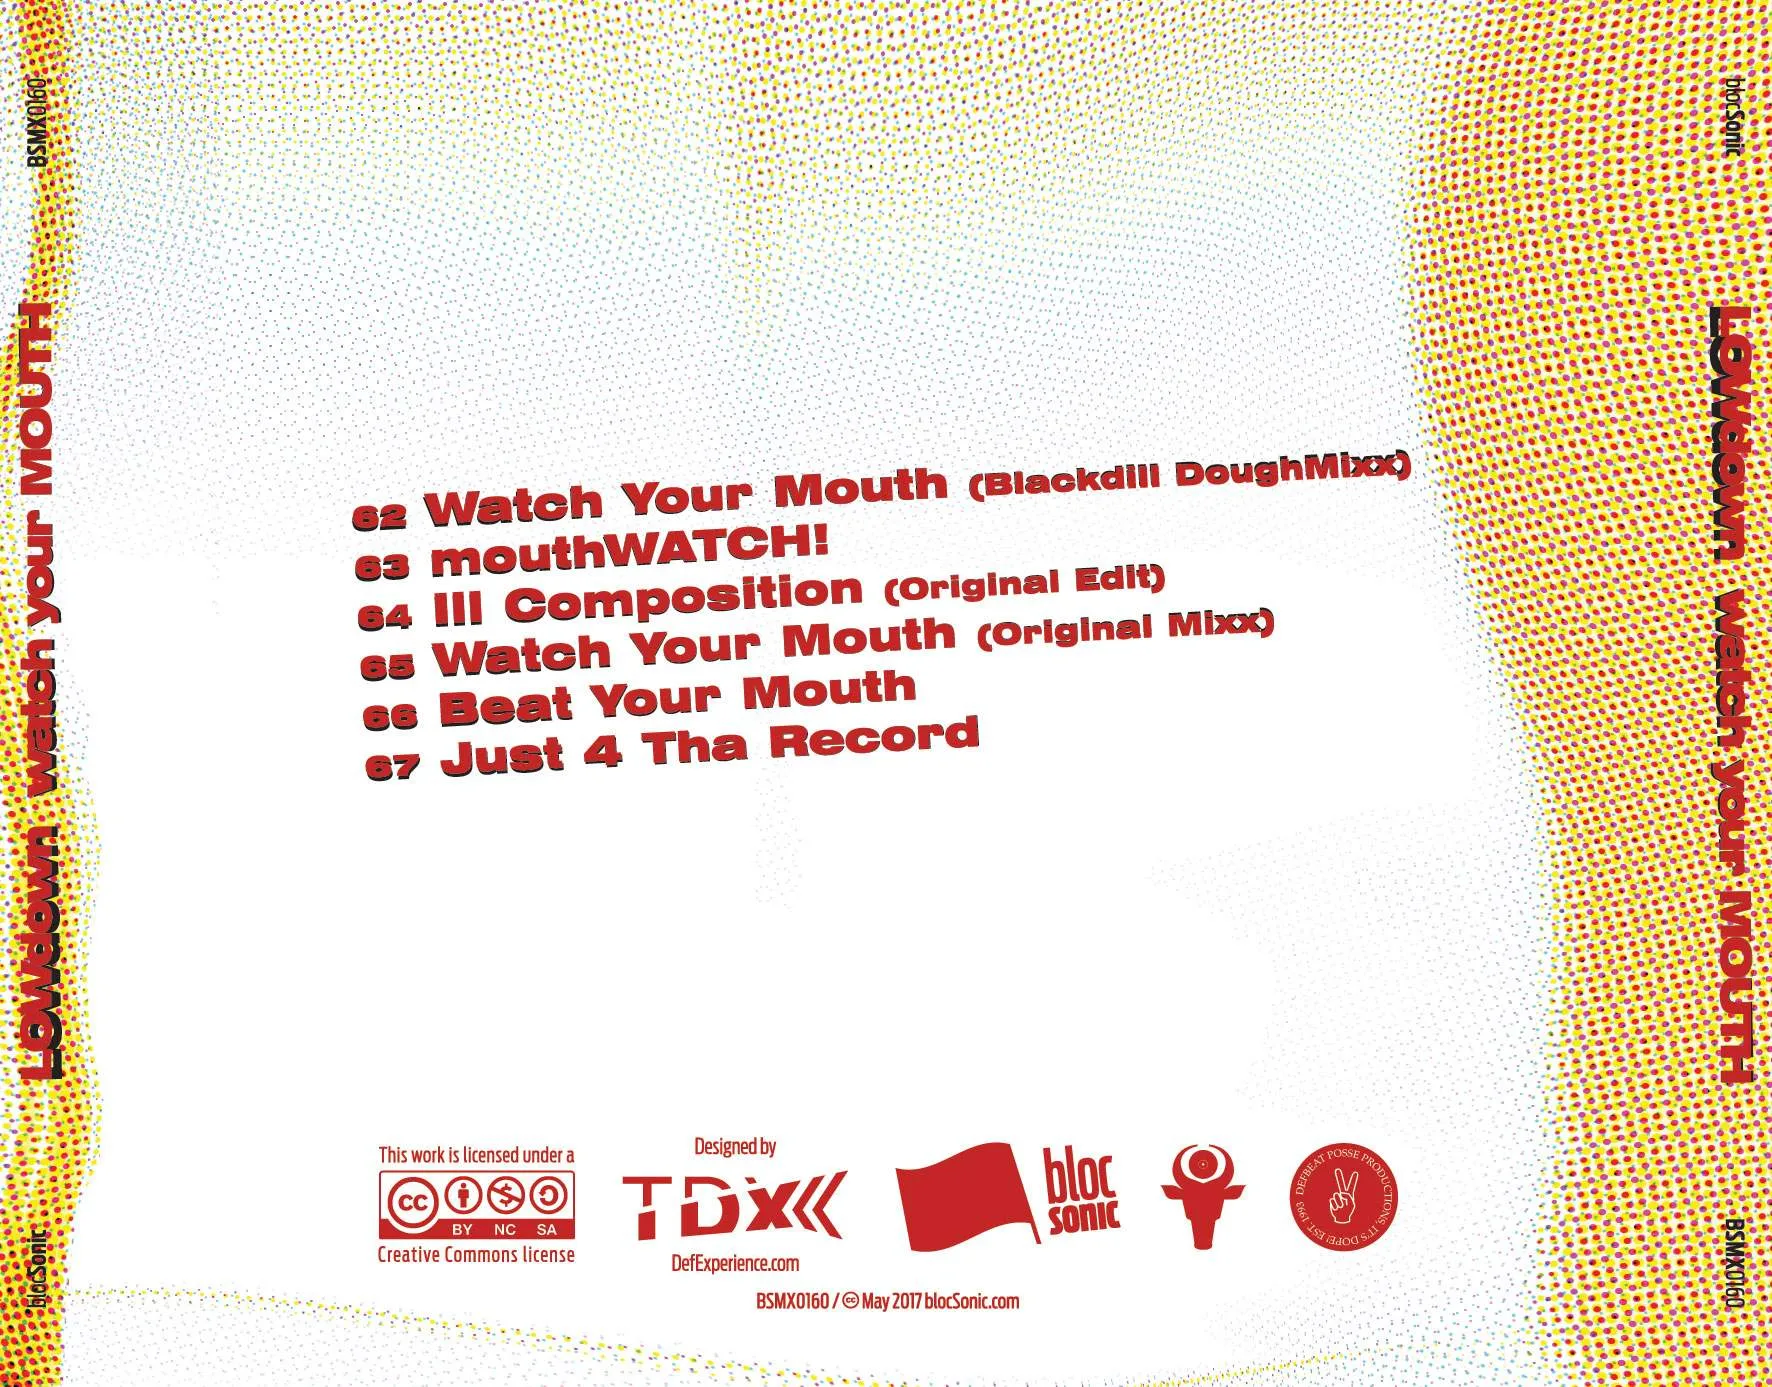 Album traycard for “watch your MOUTH” by LOWdown